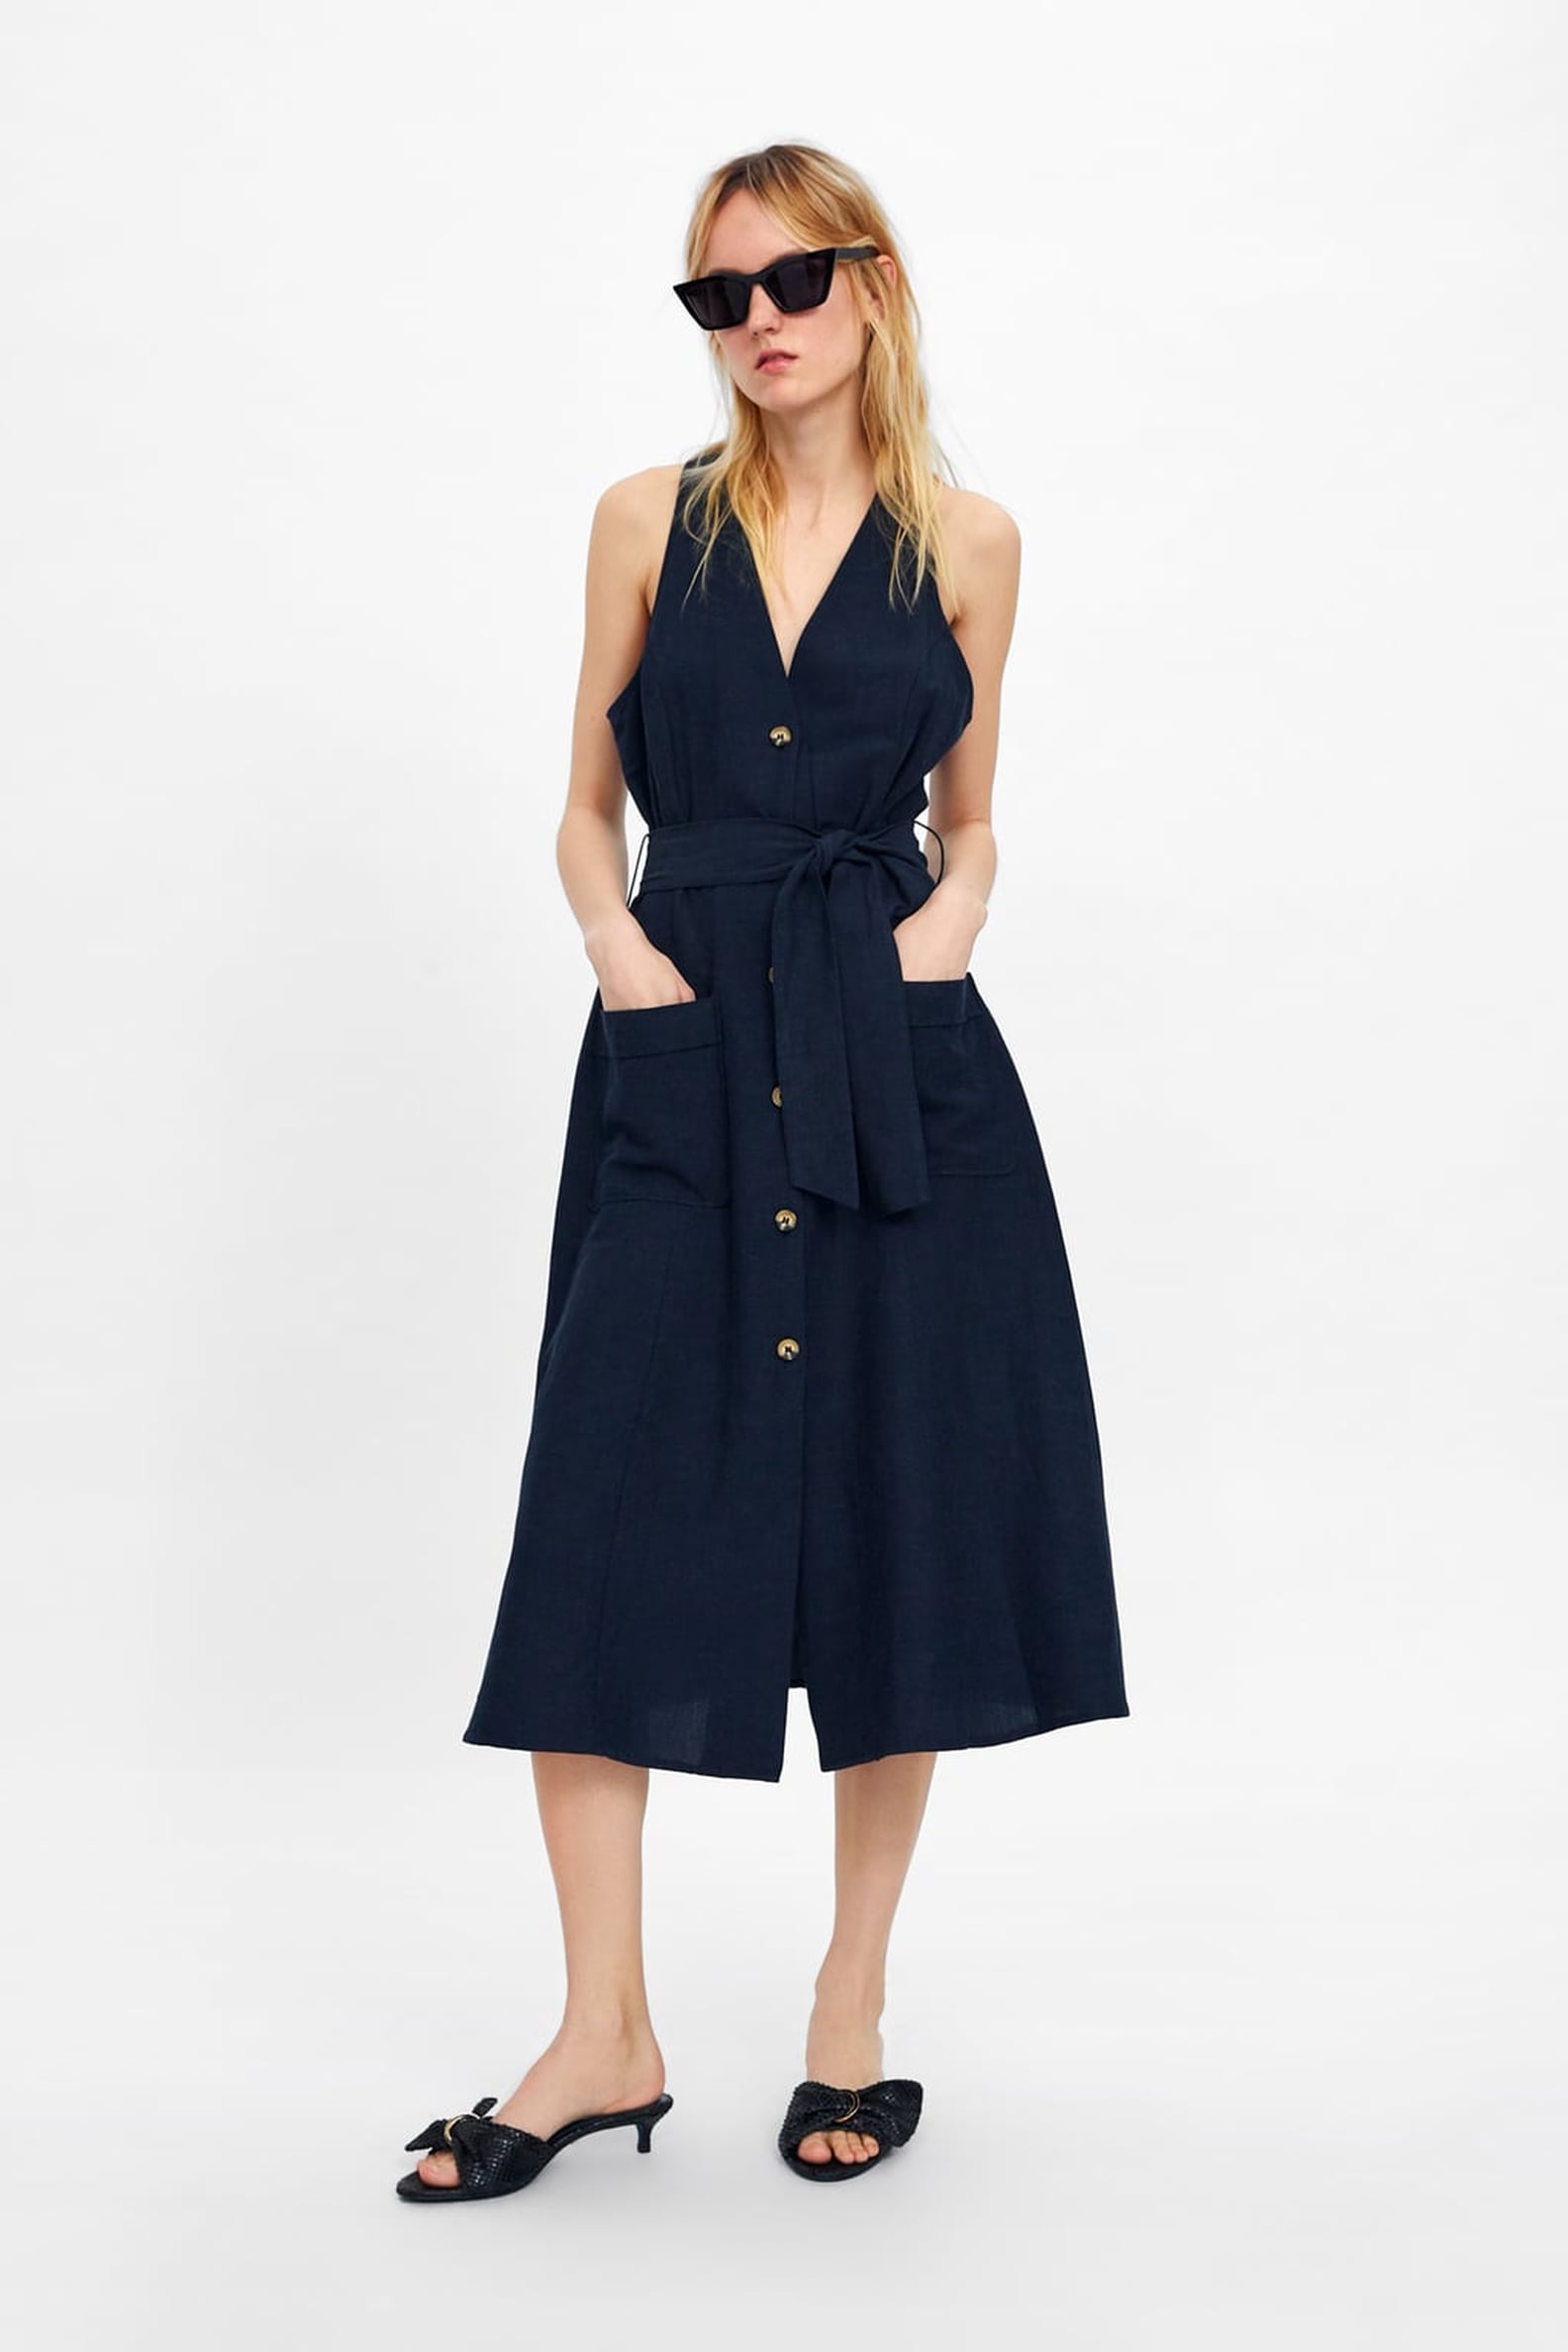 The Best Summer Dresses on Sale at Zara | POPSUGAR Fashion